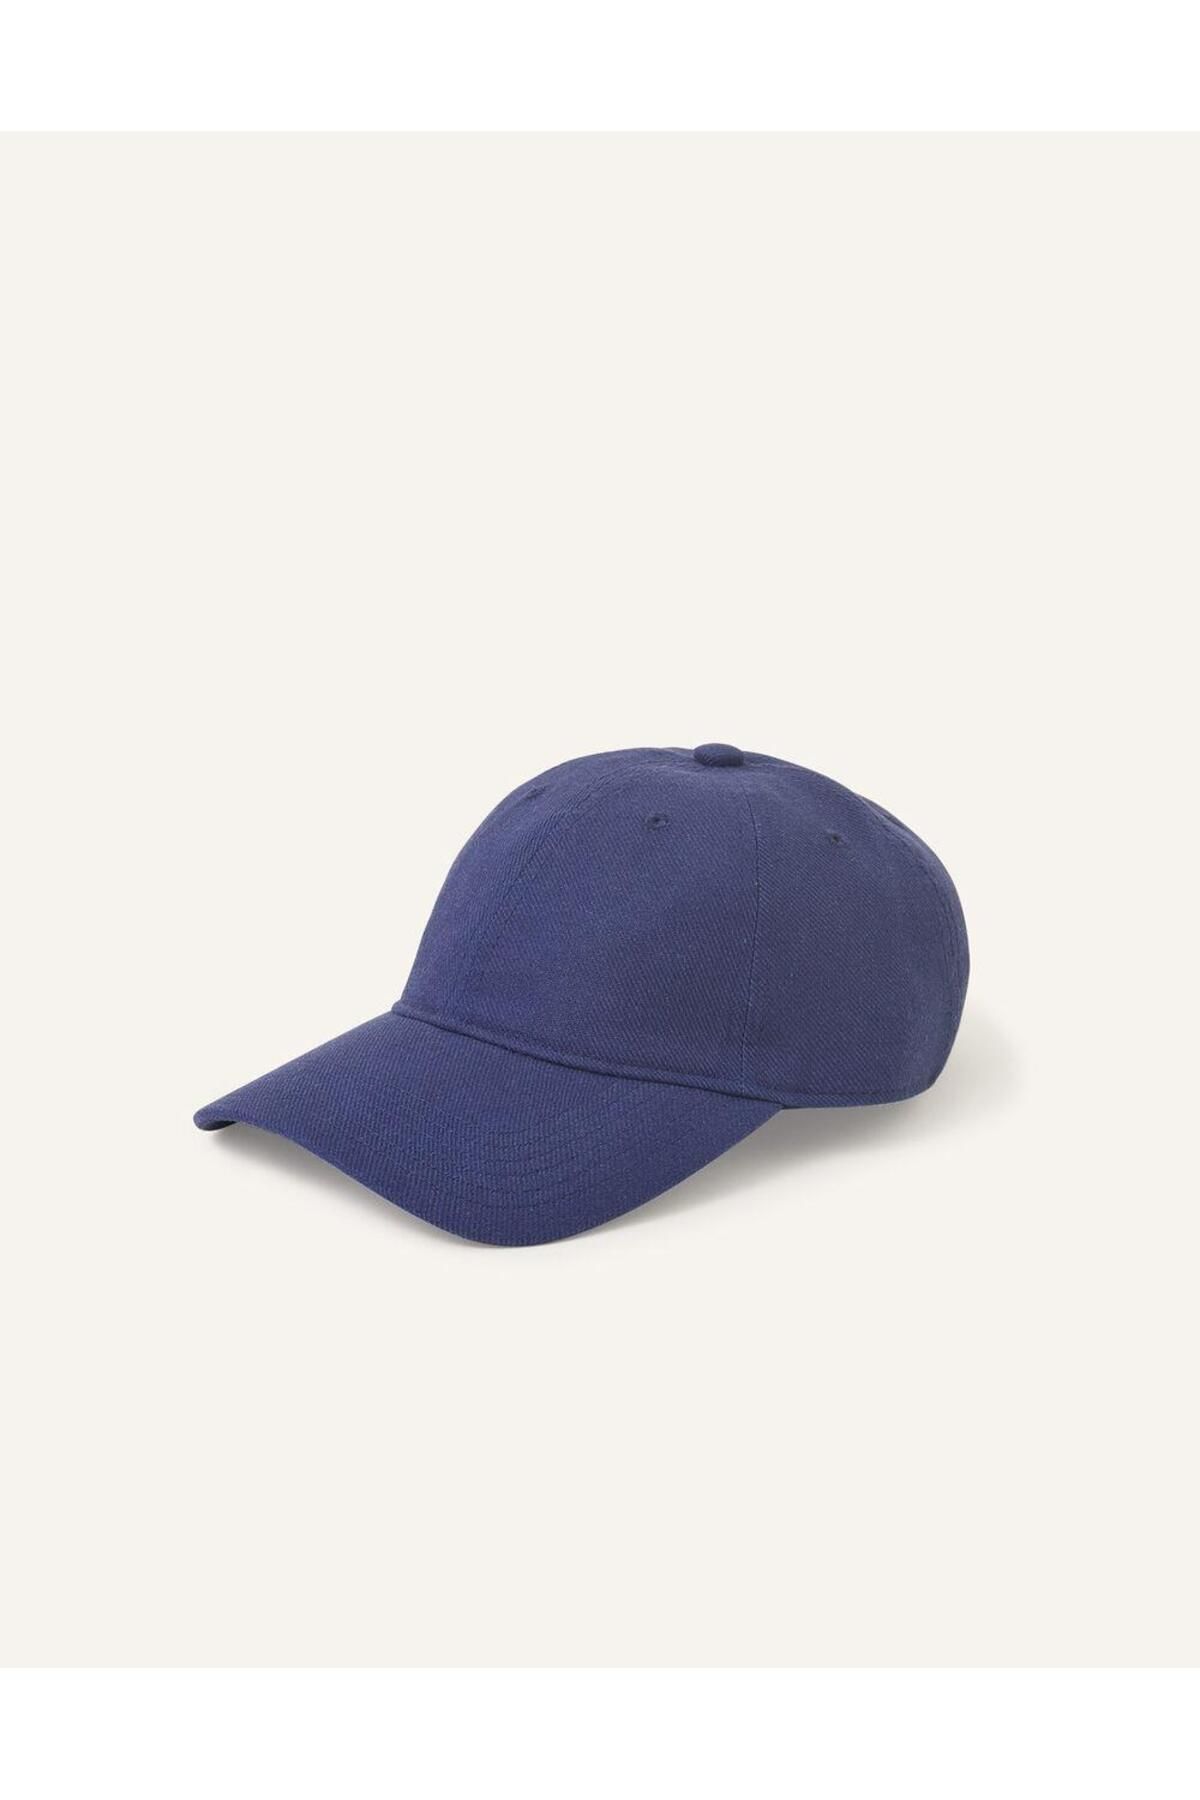 Accessorize Lacivert Şapka